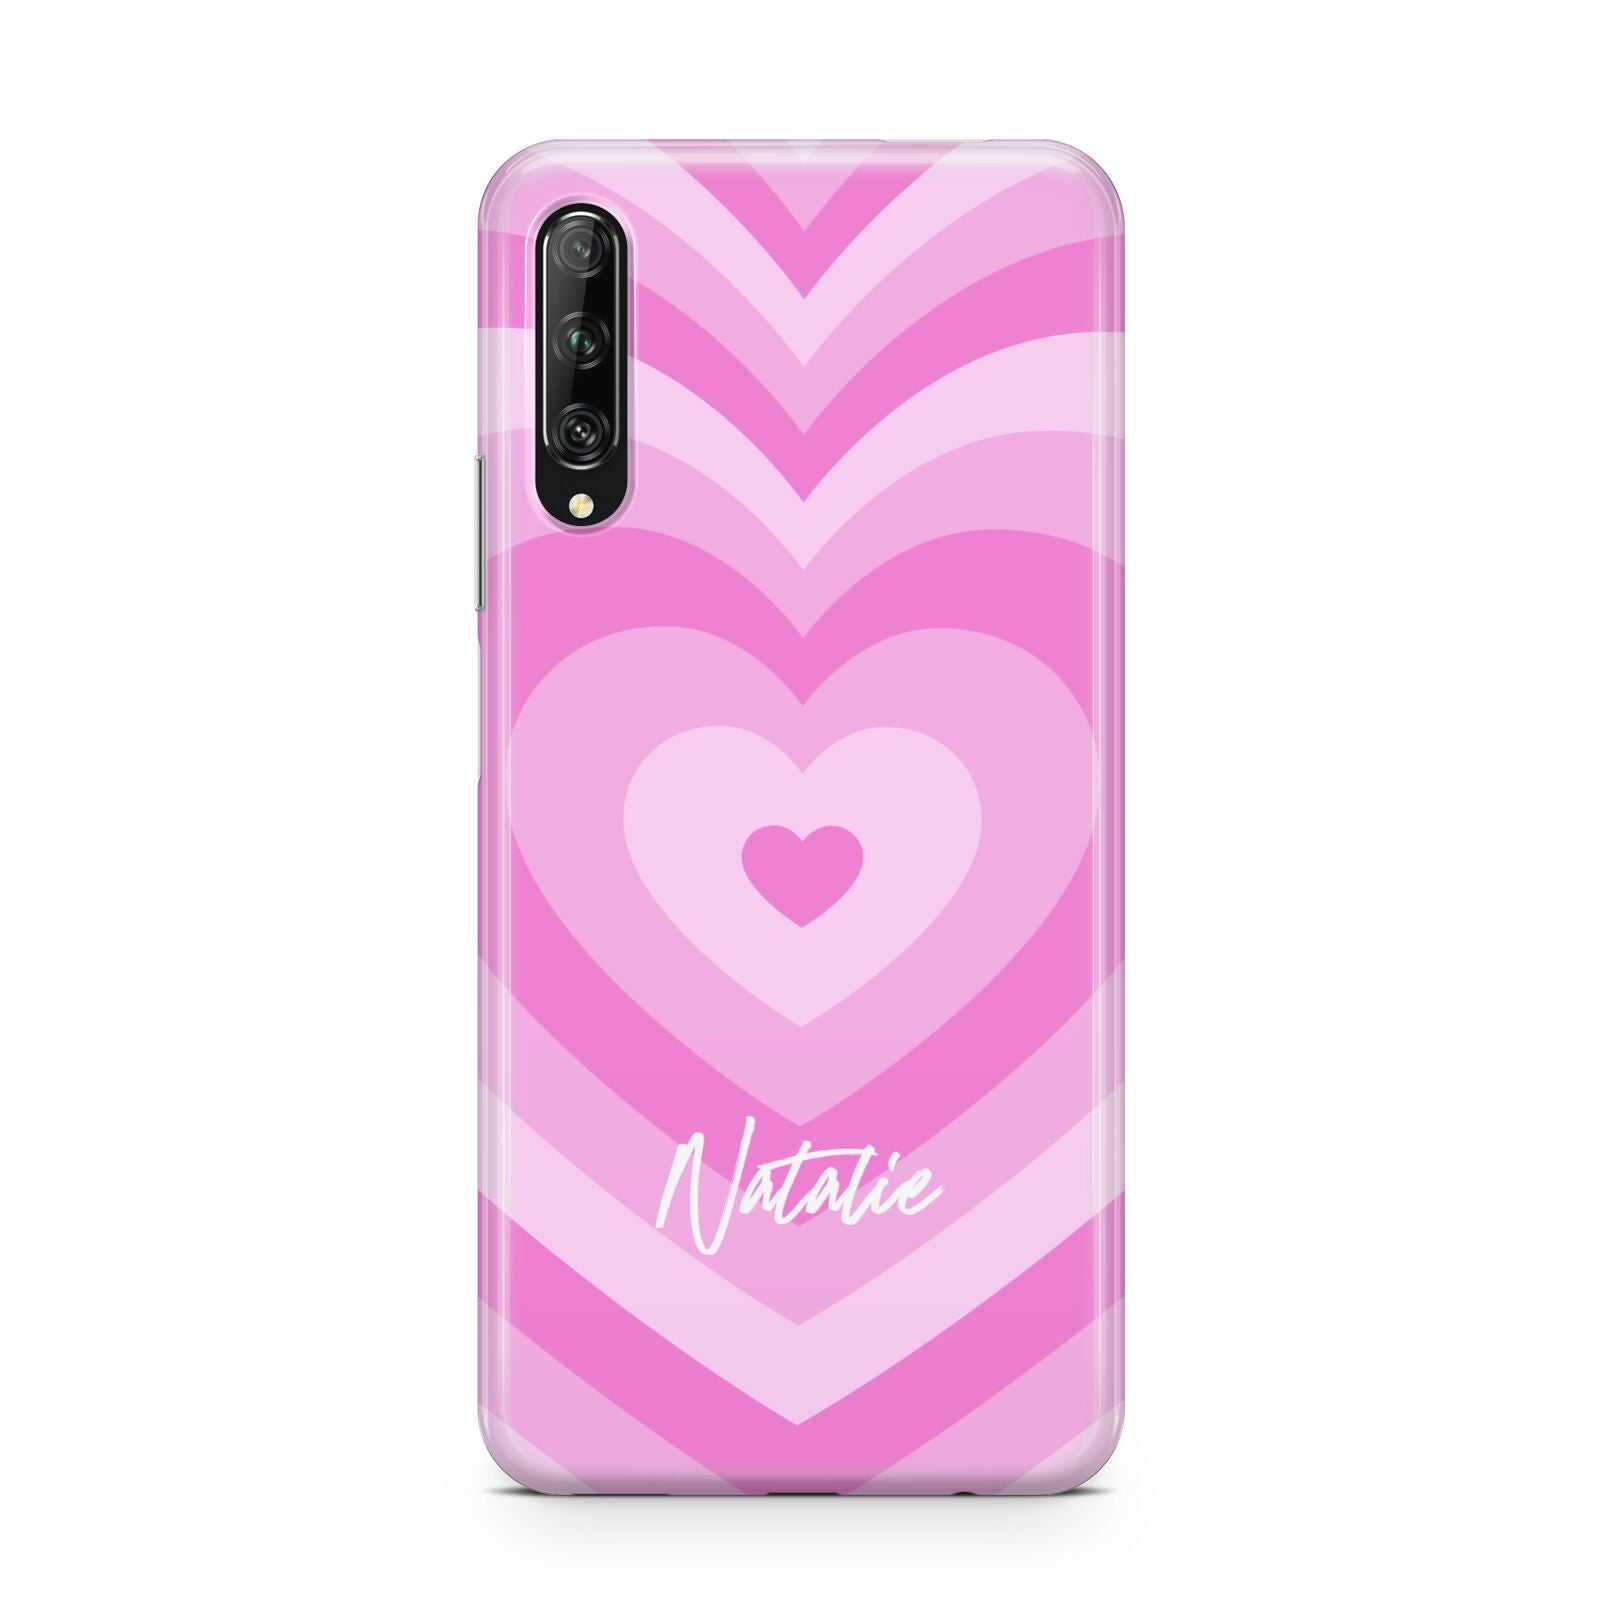 Personalised Pink Heart Huawei P Smart Pro 2019